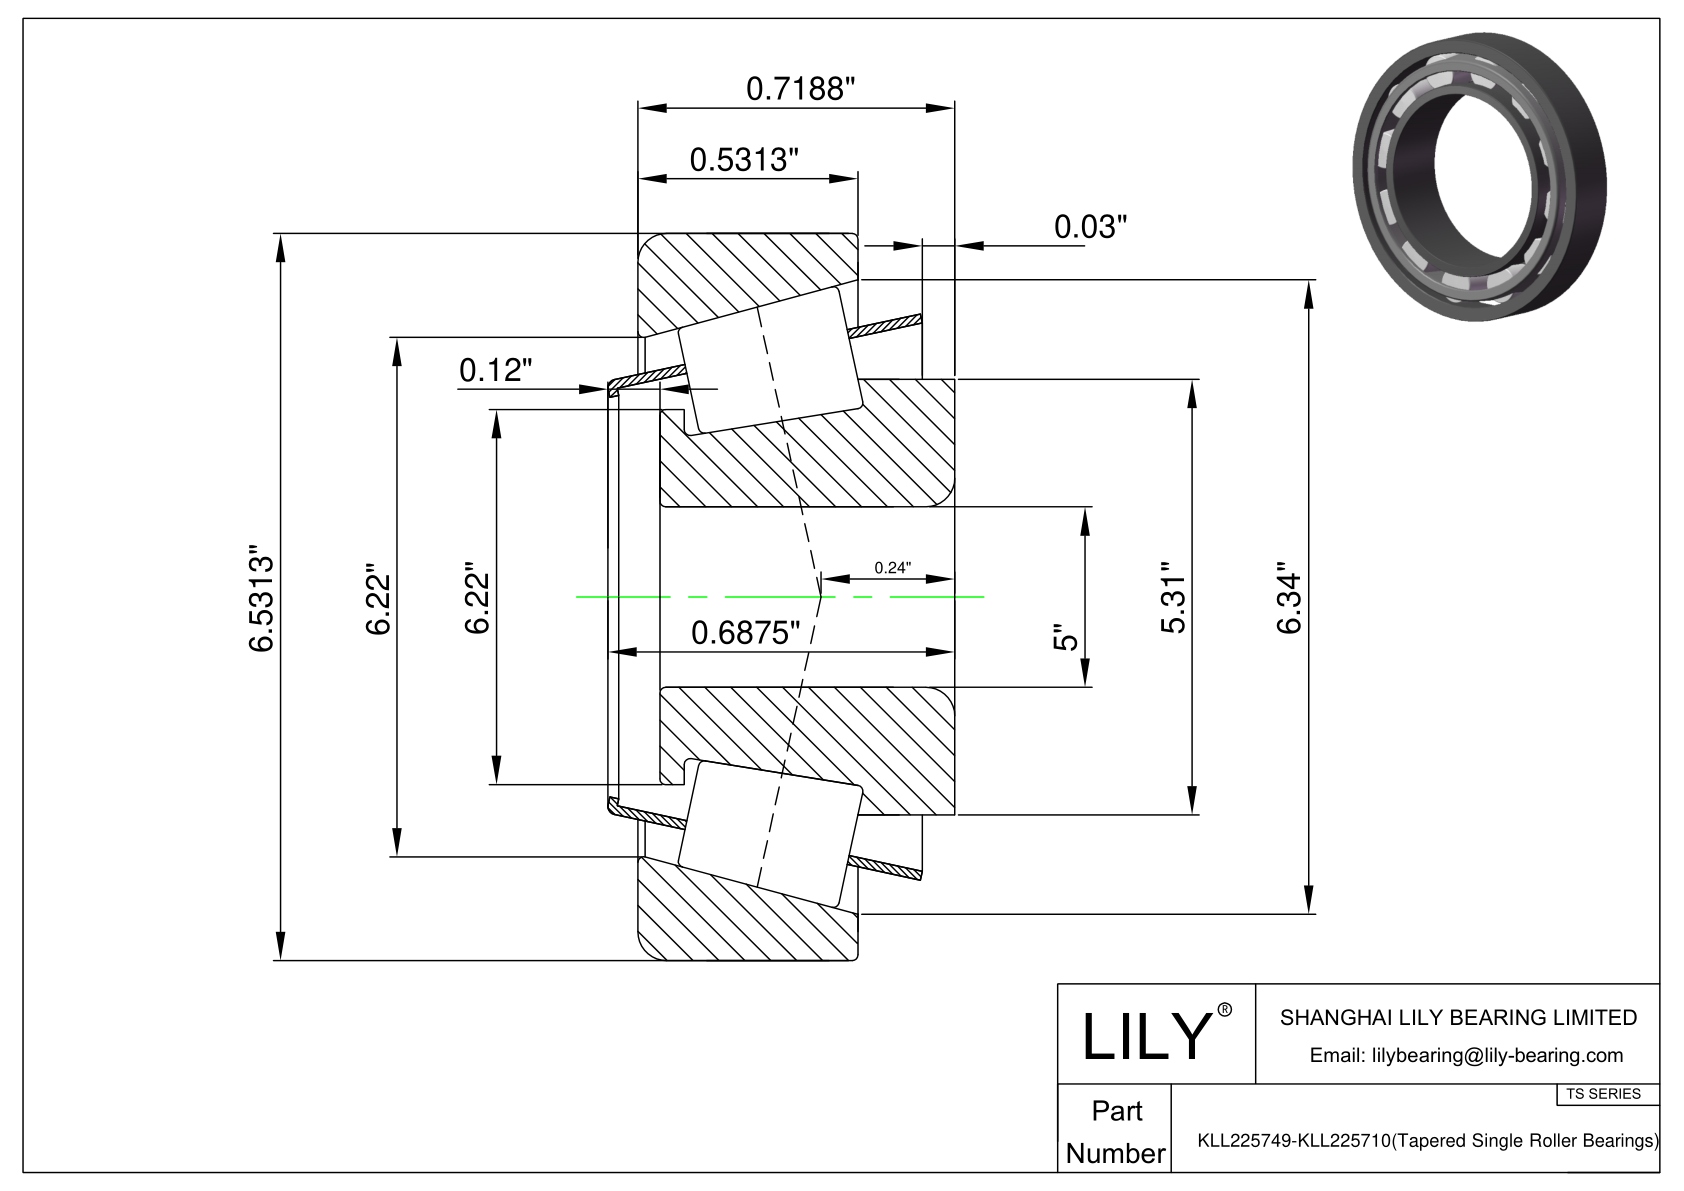 KLL225749-KLL225710 TS系列(圆锥单滚子轴承)(英制) CAD图形